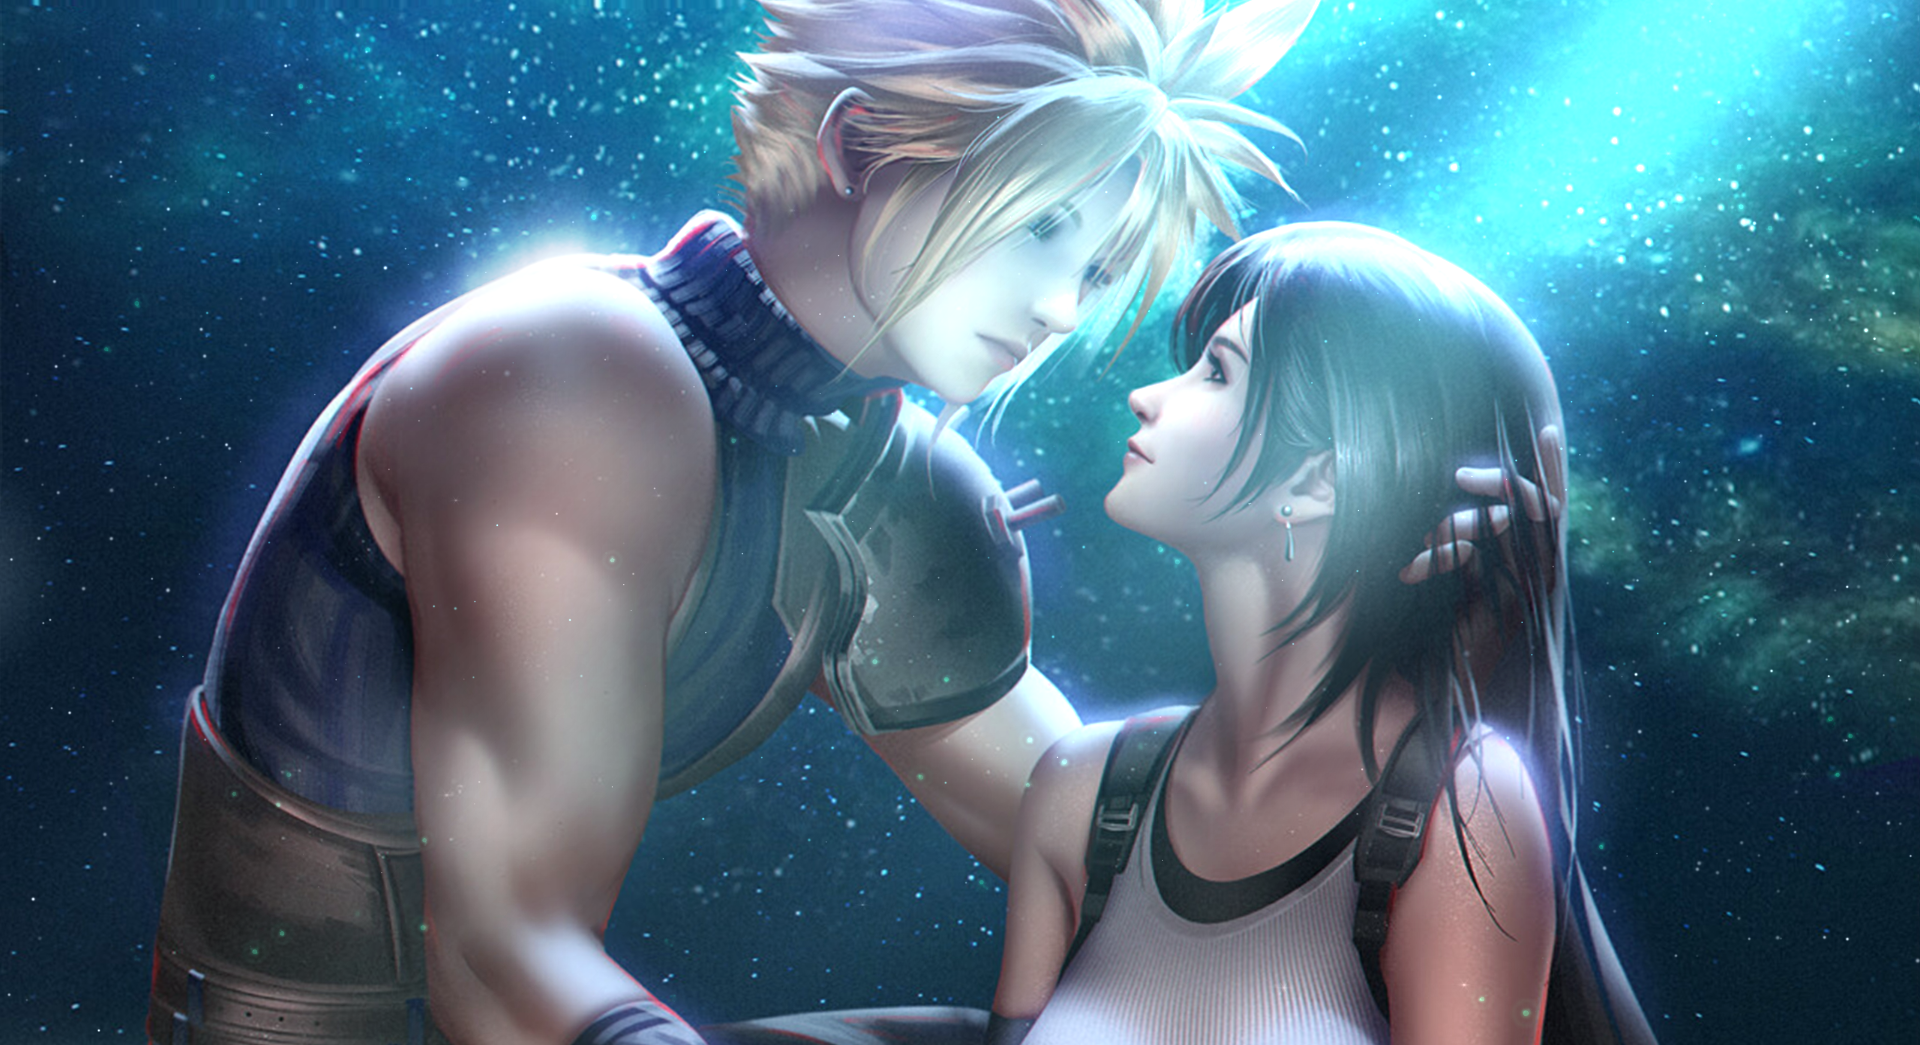 Cloud Tifa Starry Night Final Fantasy VII Remake live wallpaper [DOWNLOAD FREE]